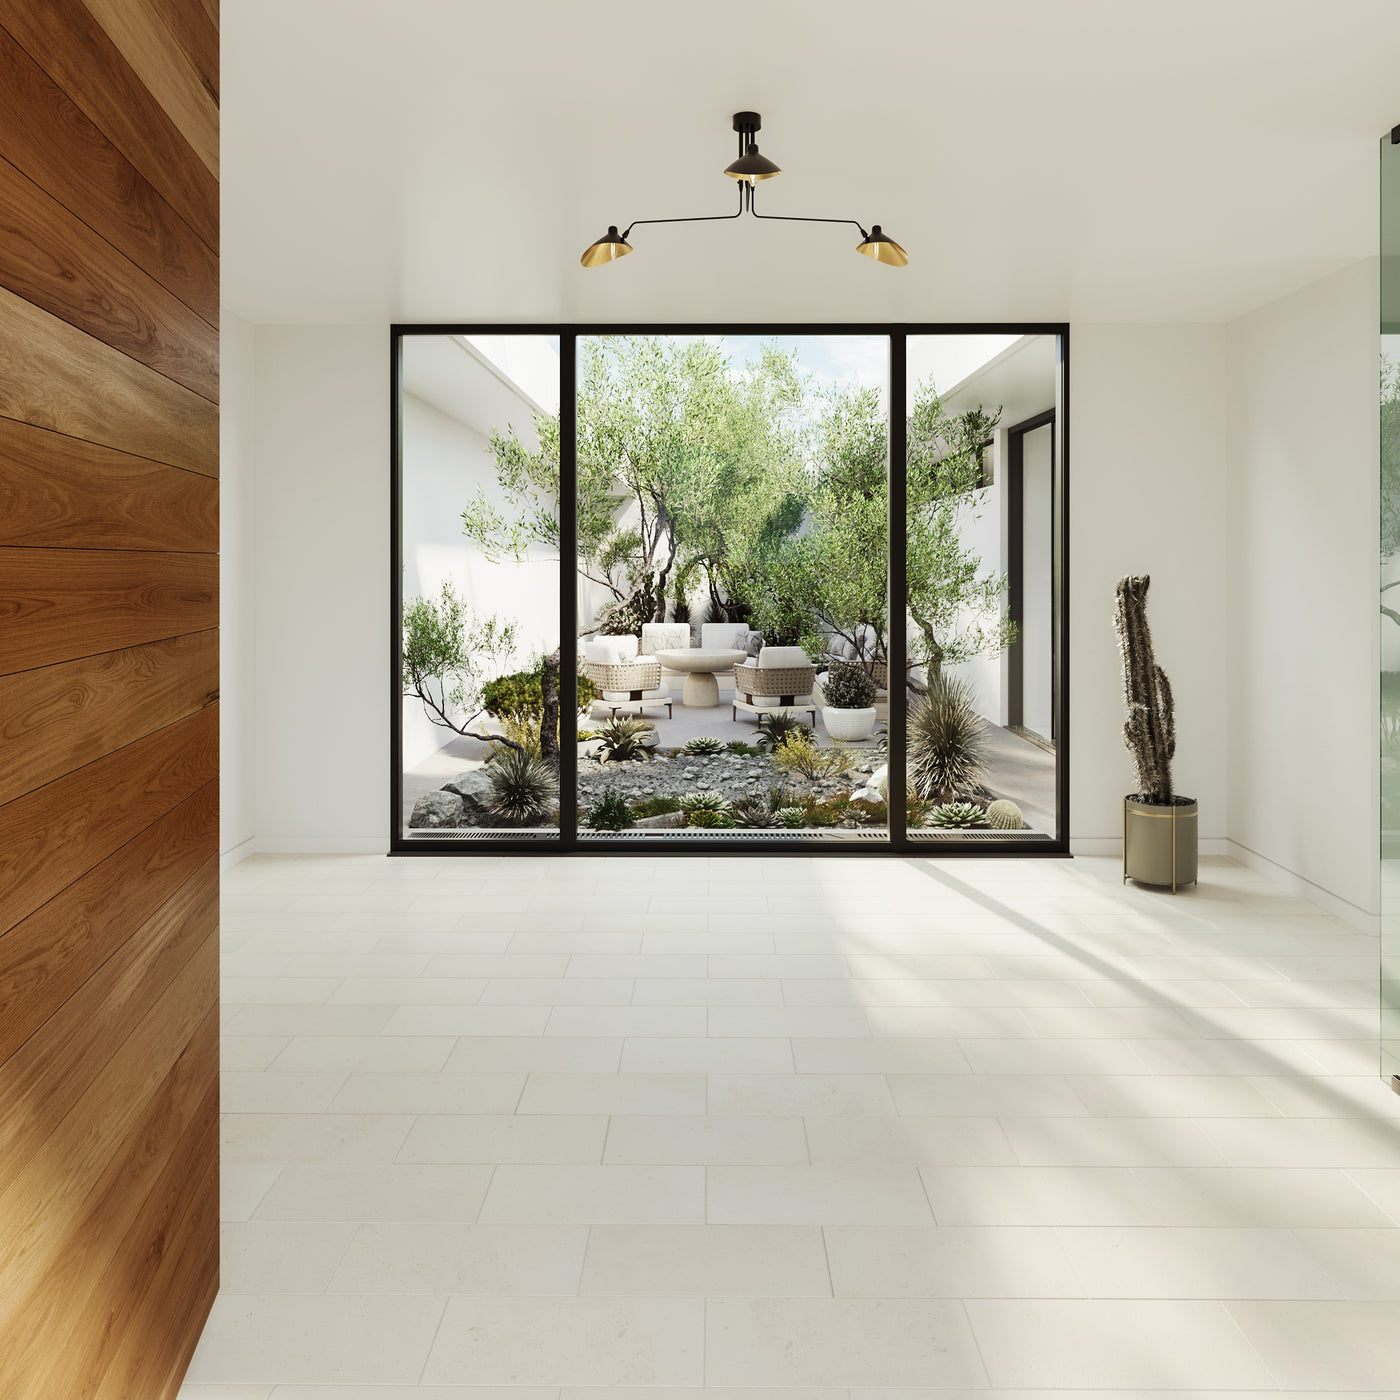 MATERIAL Designer Partnerships: Luxe Limestone Interiors